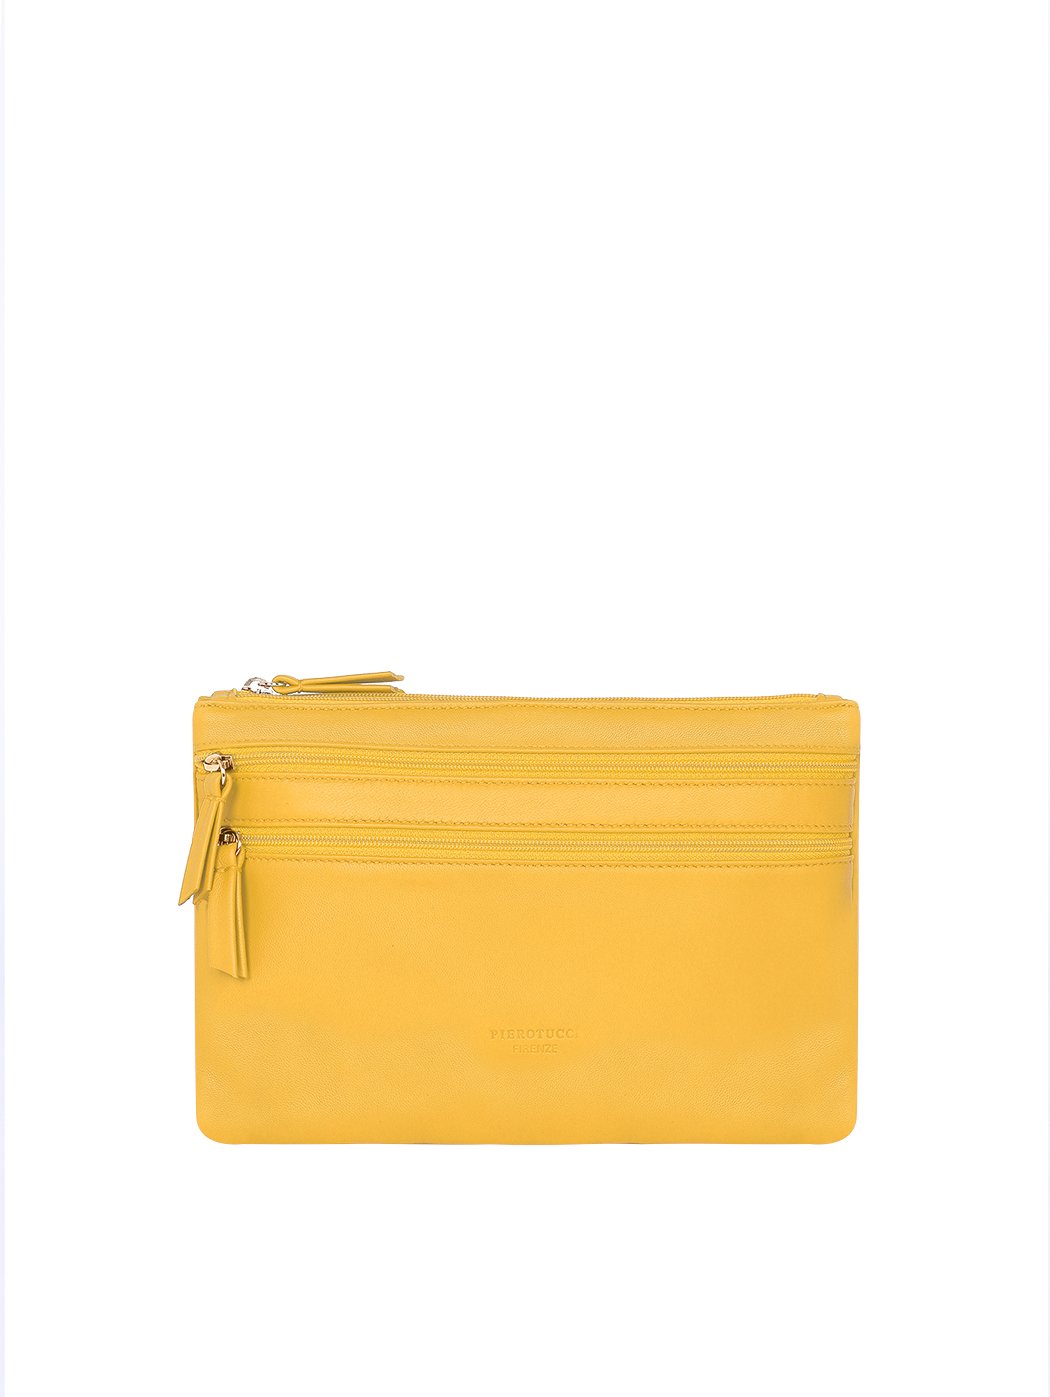 Yellow Convertible Crossbody Clutch Bag